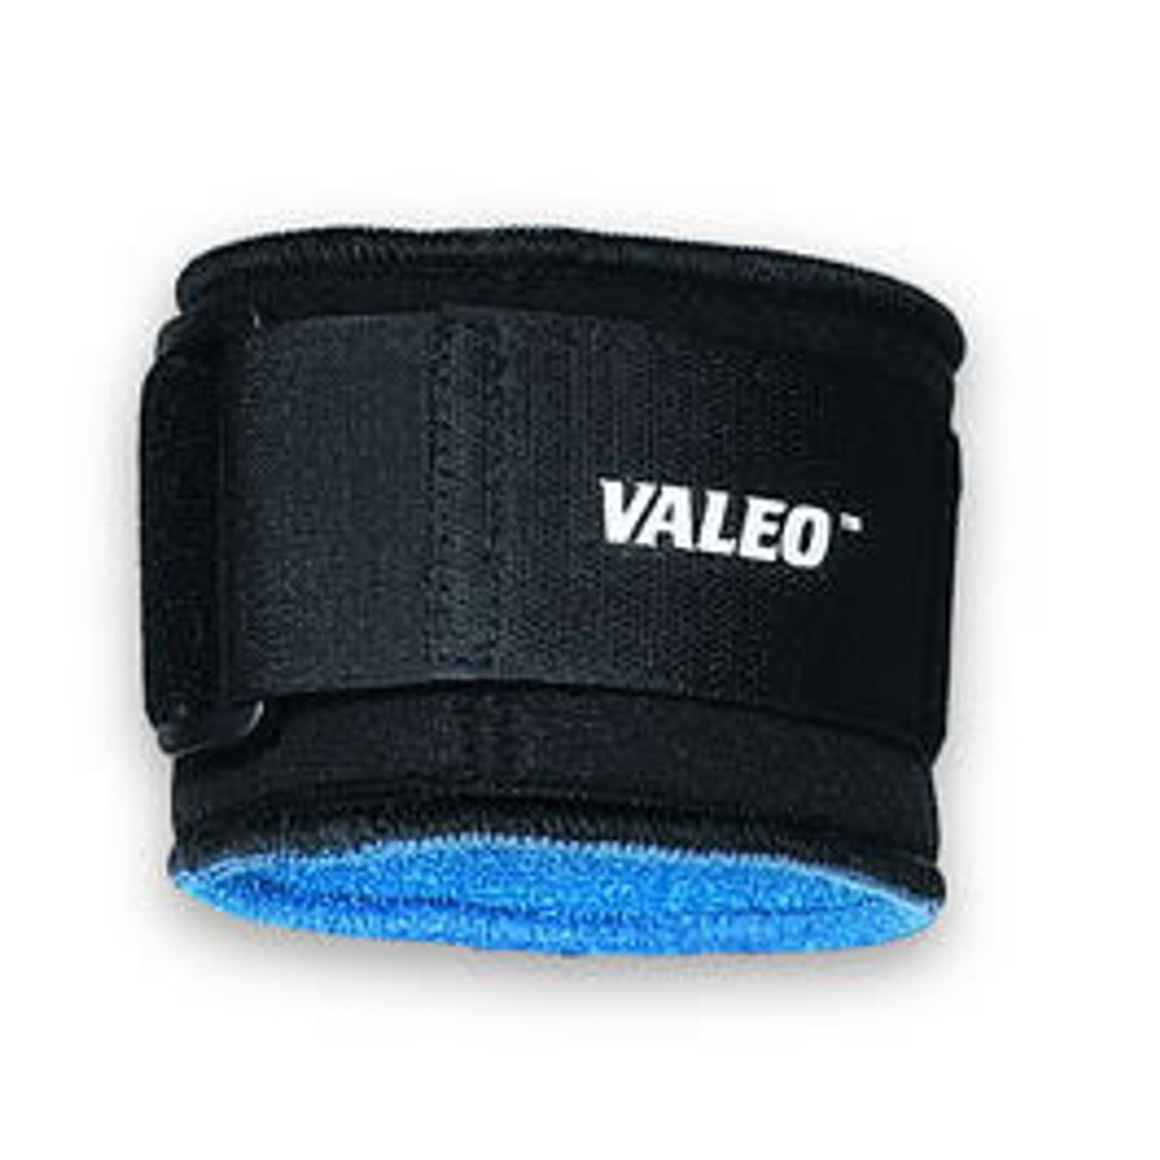 Valeo Inc VA4543LGN